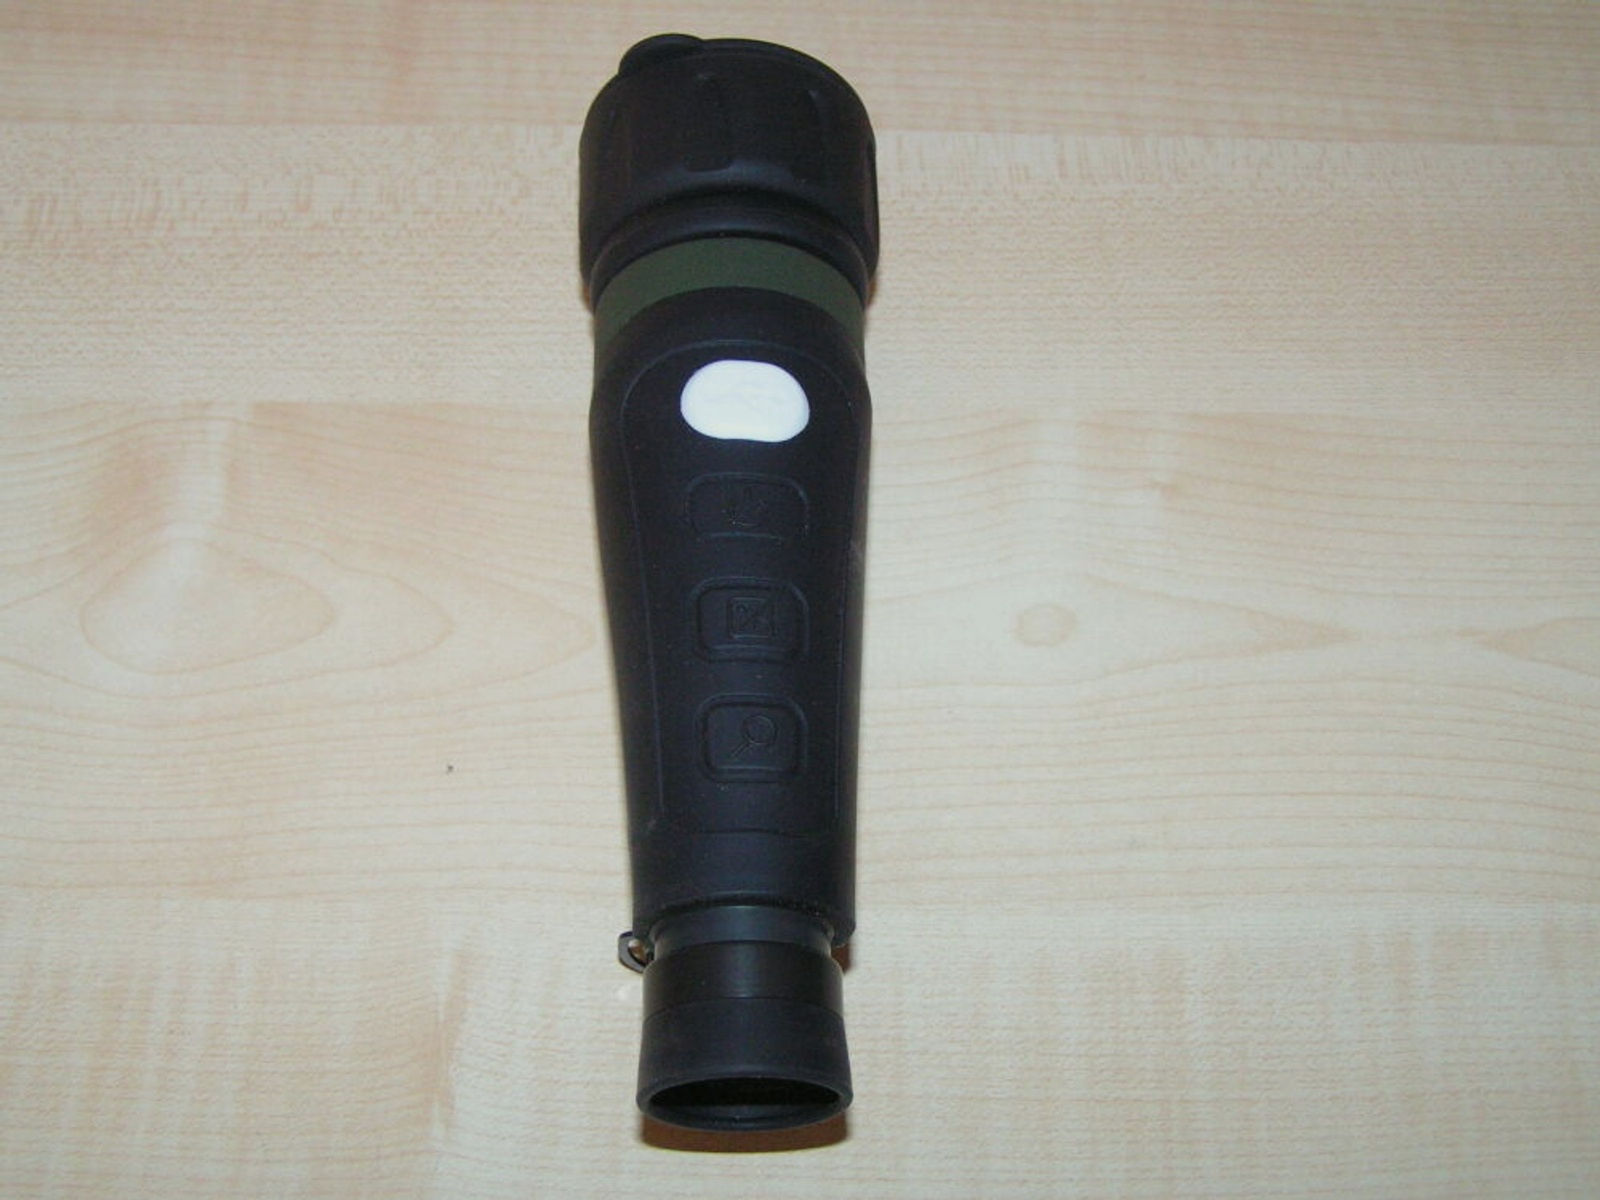 Lahoux Optics	 Spotter NL 350